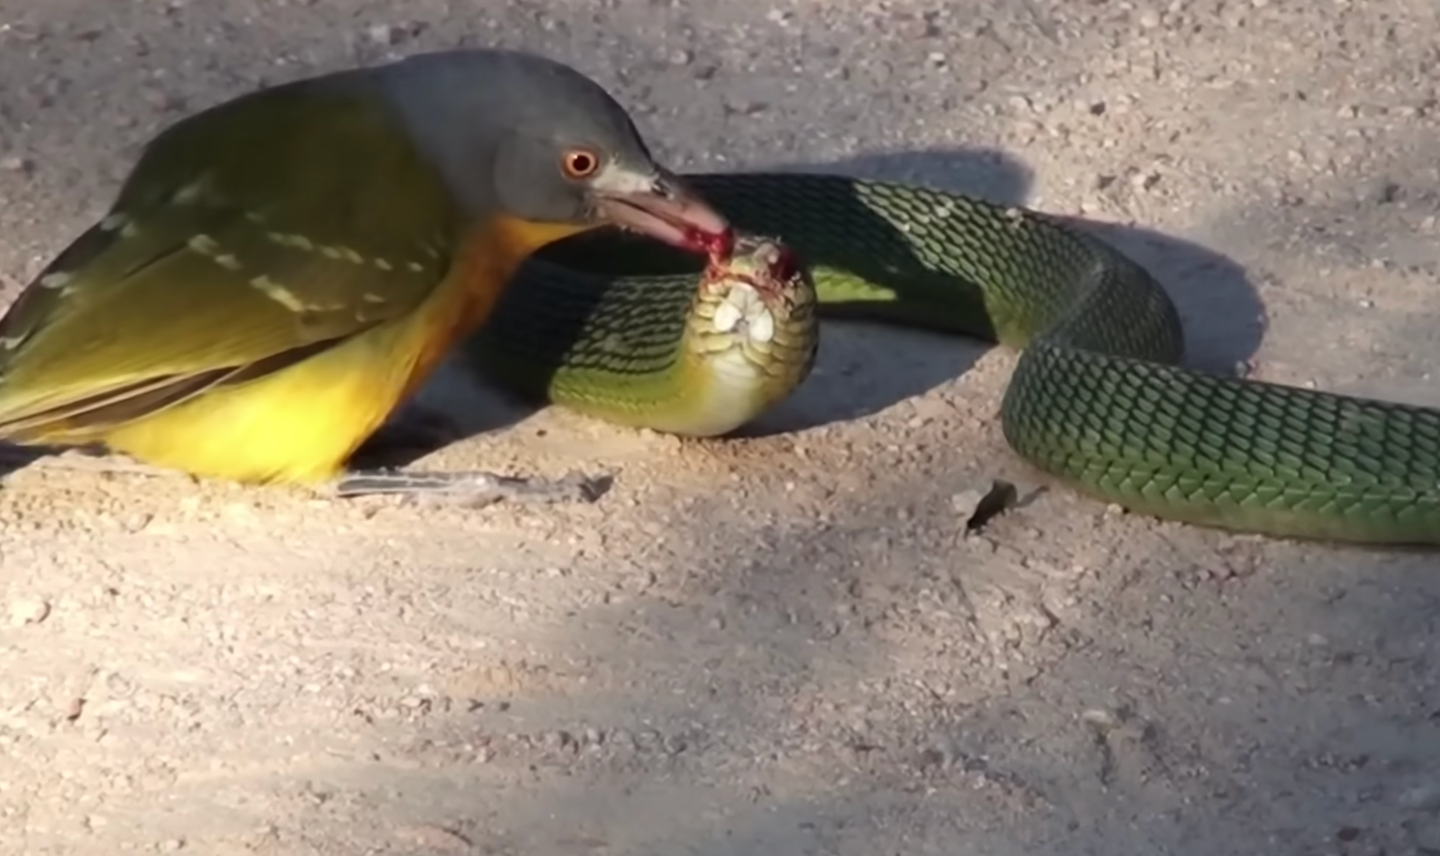 bird pecks eyes of snake